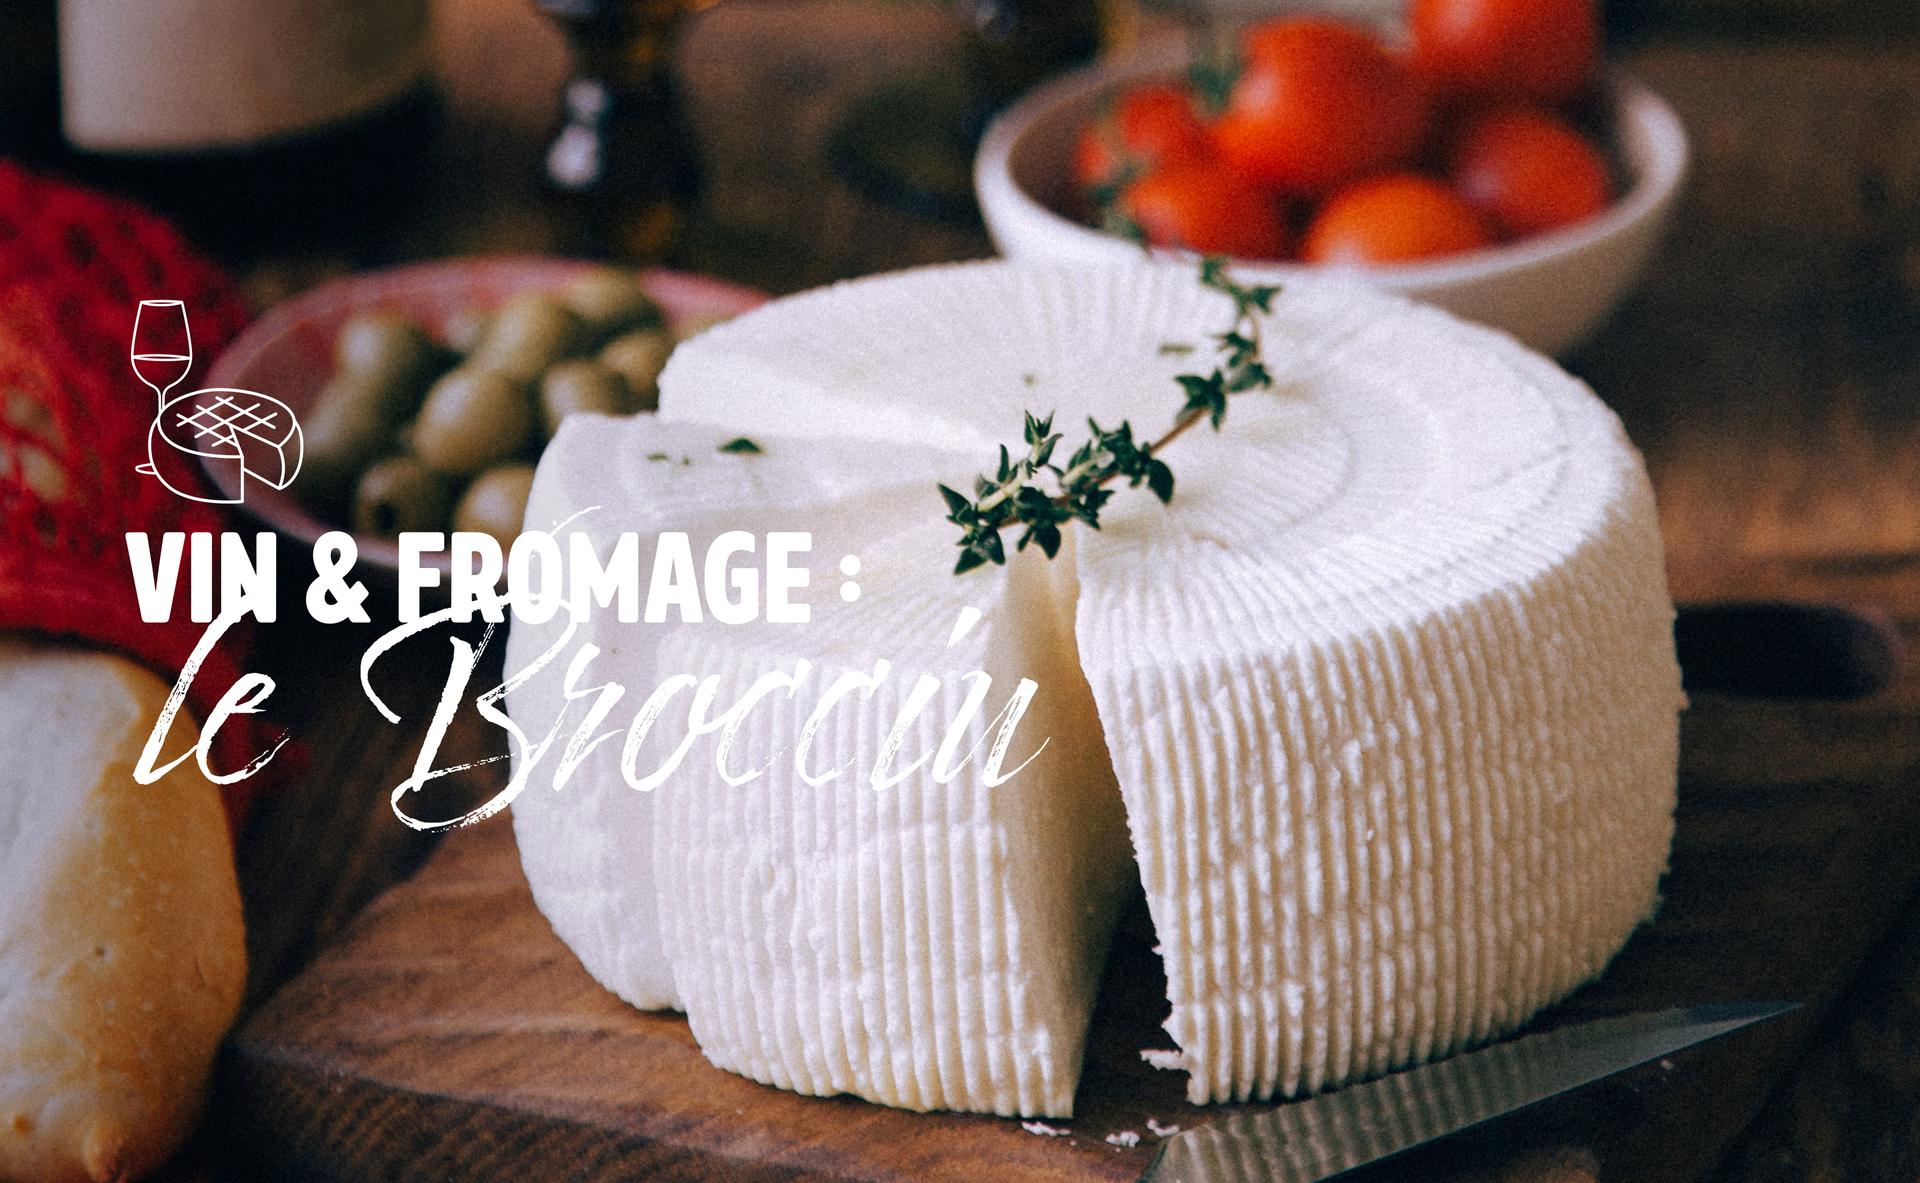 Vin & fromage : le Brocciu